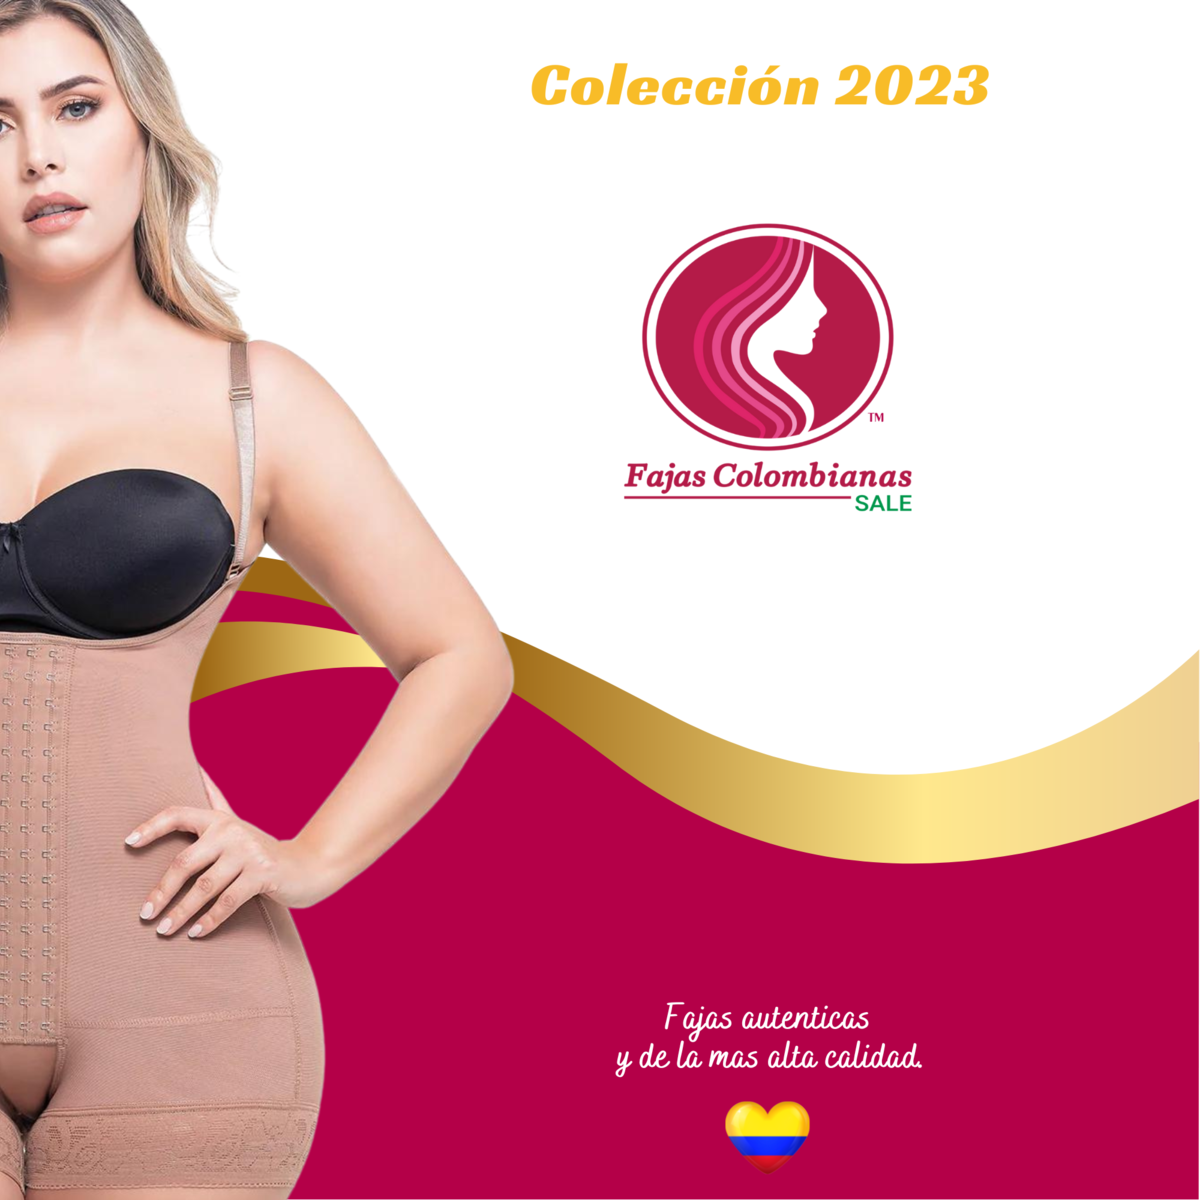 wholesale – Fajas Colombianas Sale